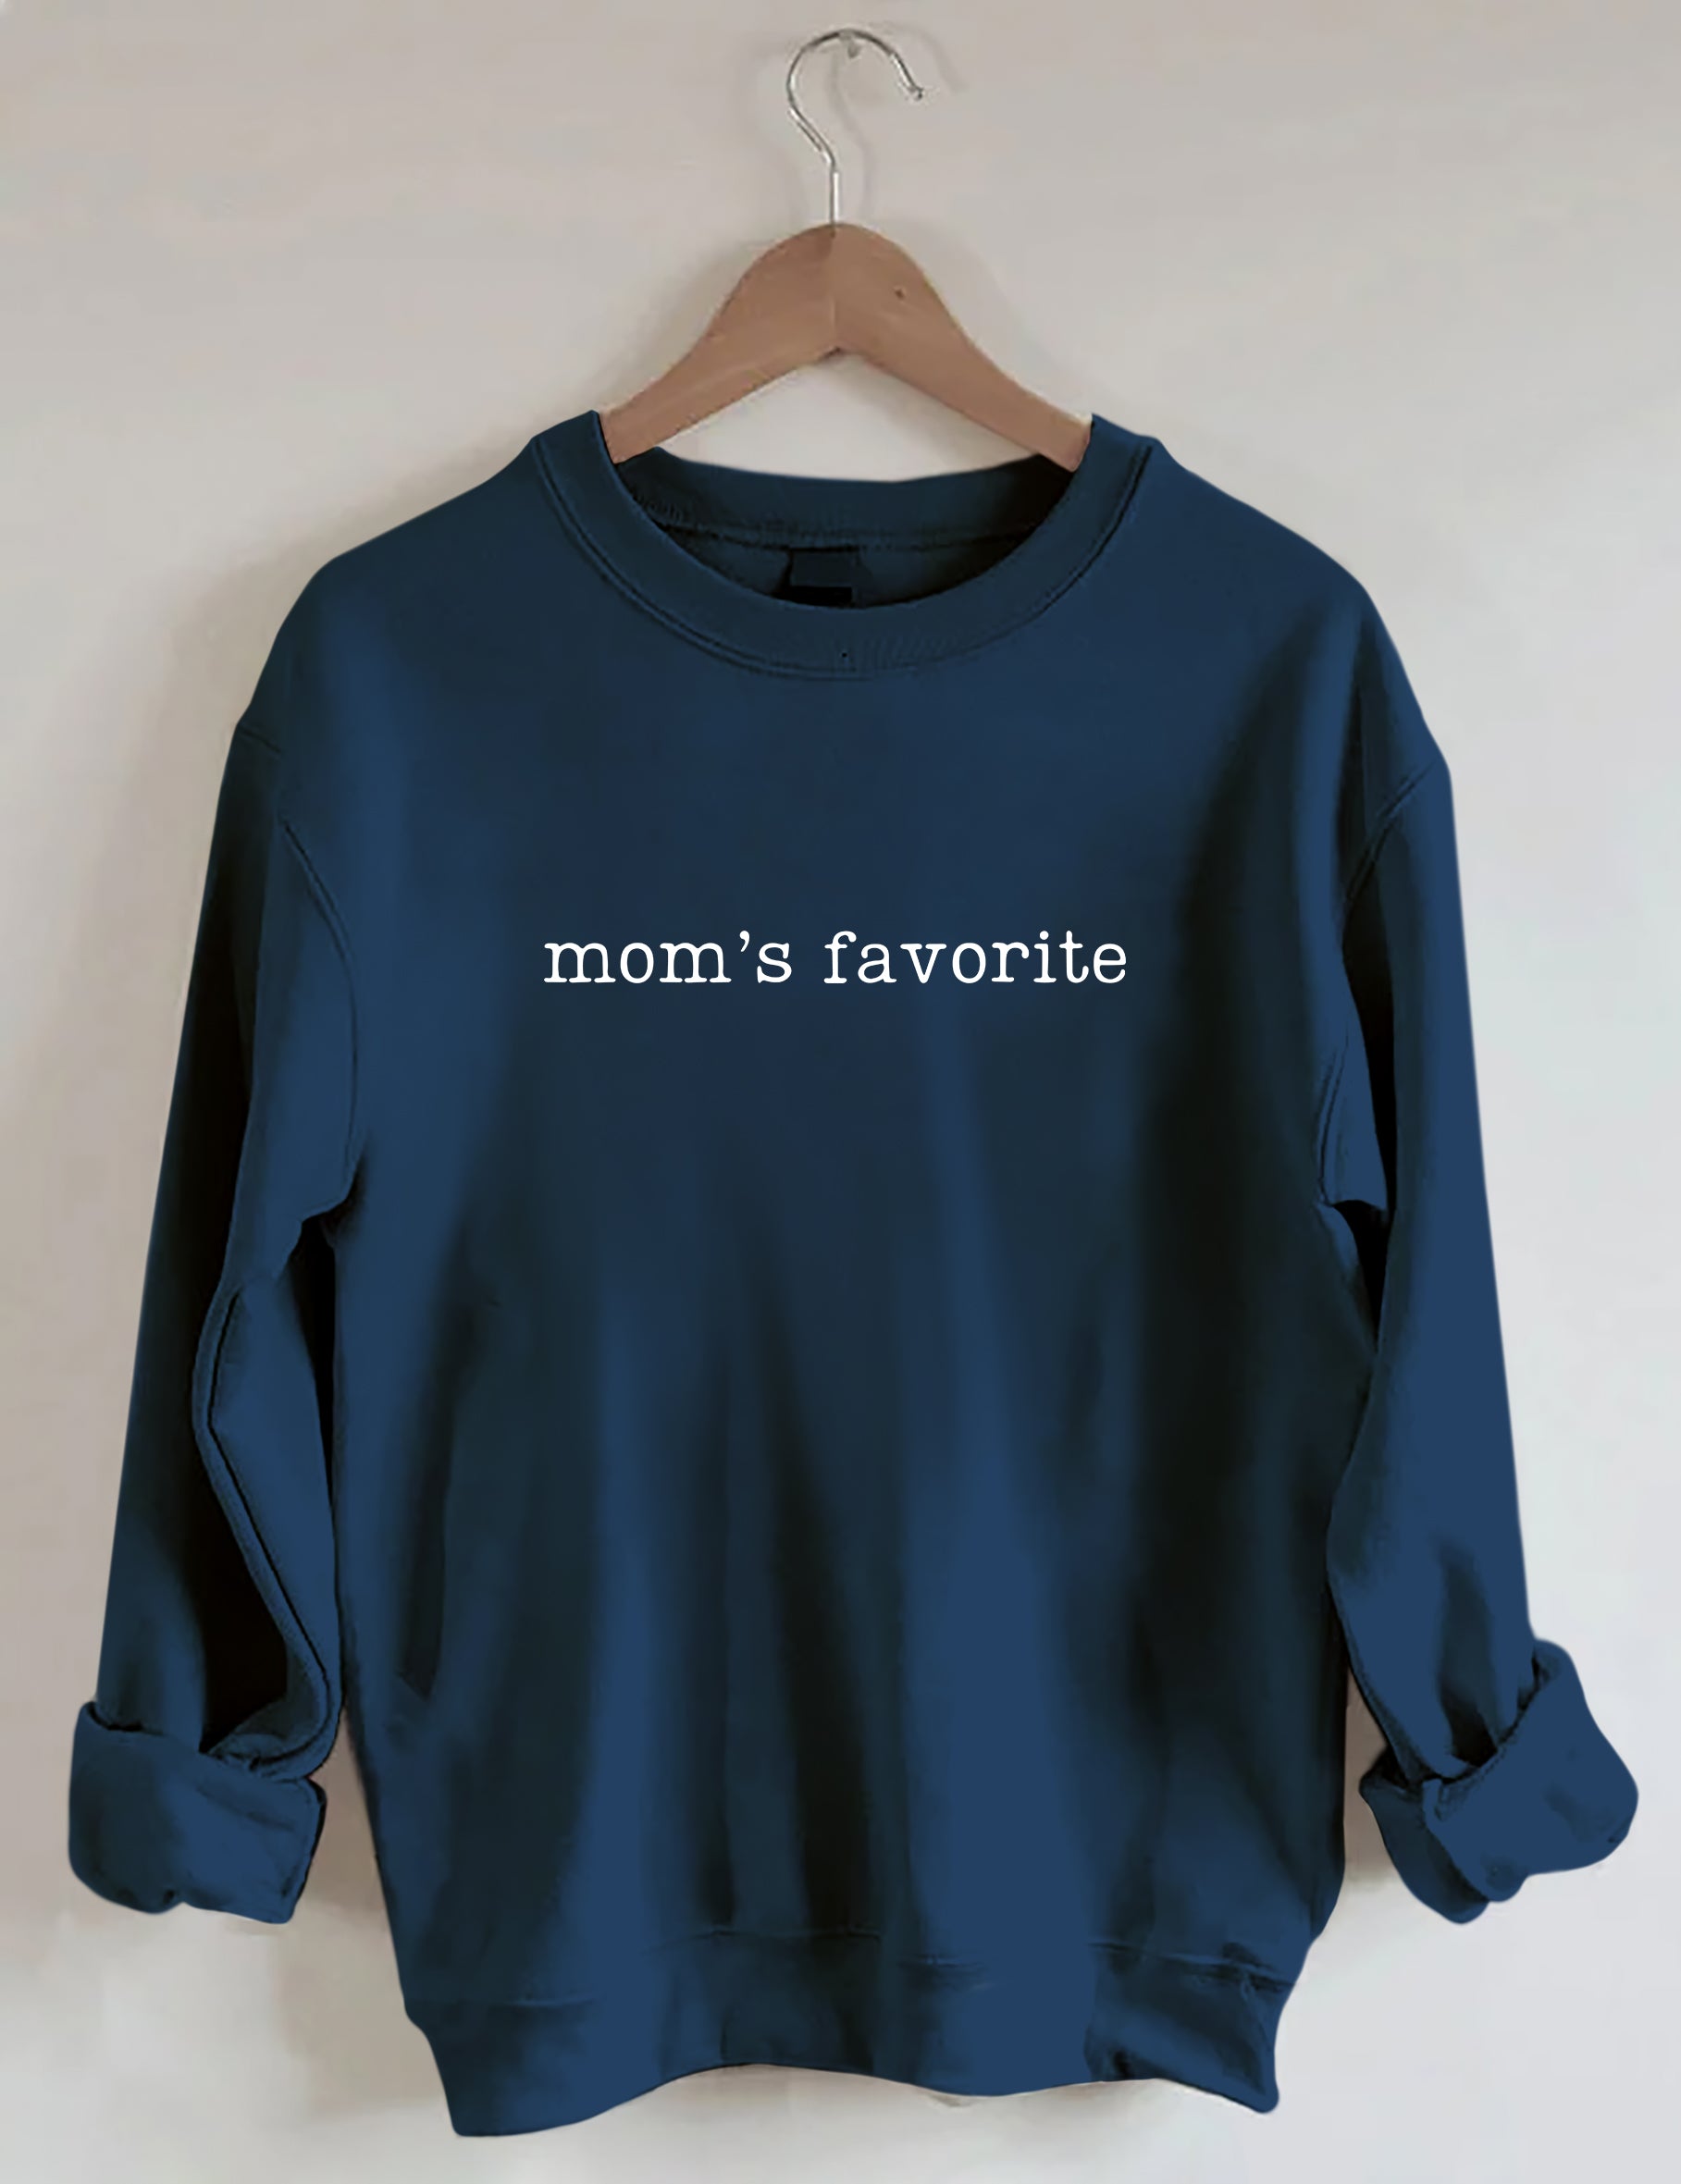 Mom's Favorite Sweatshirt